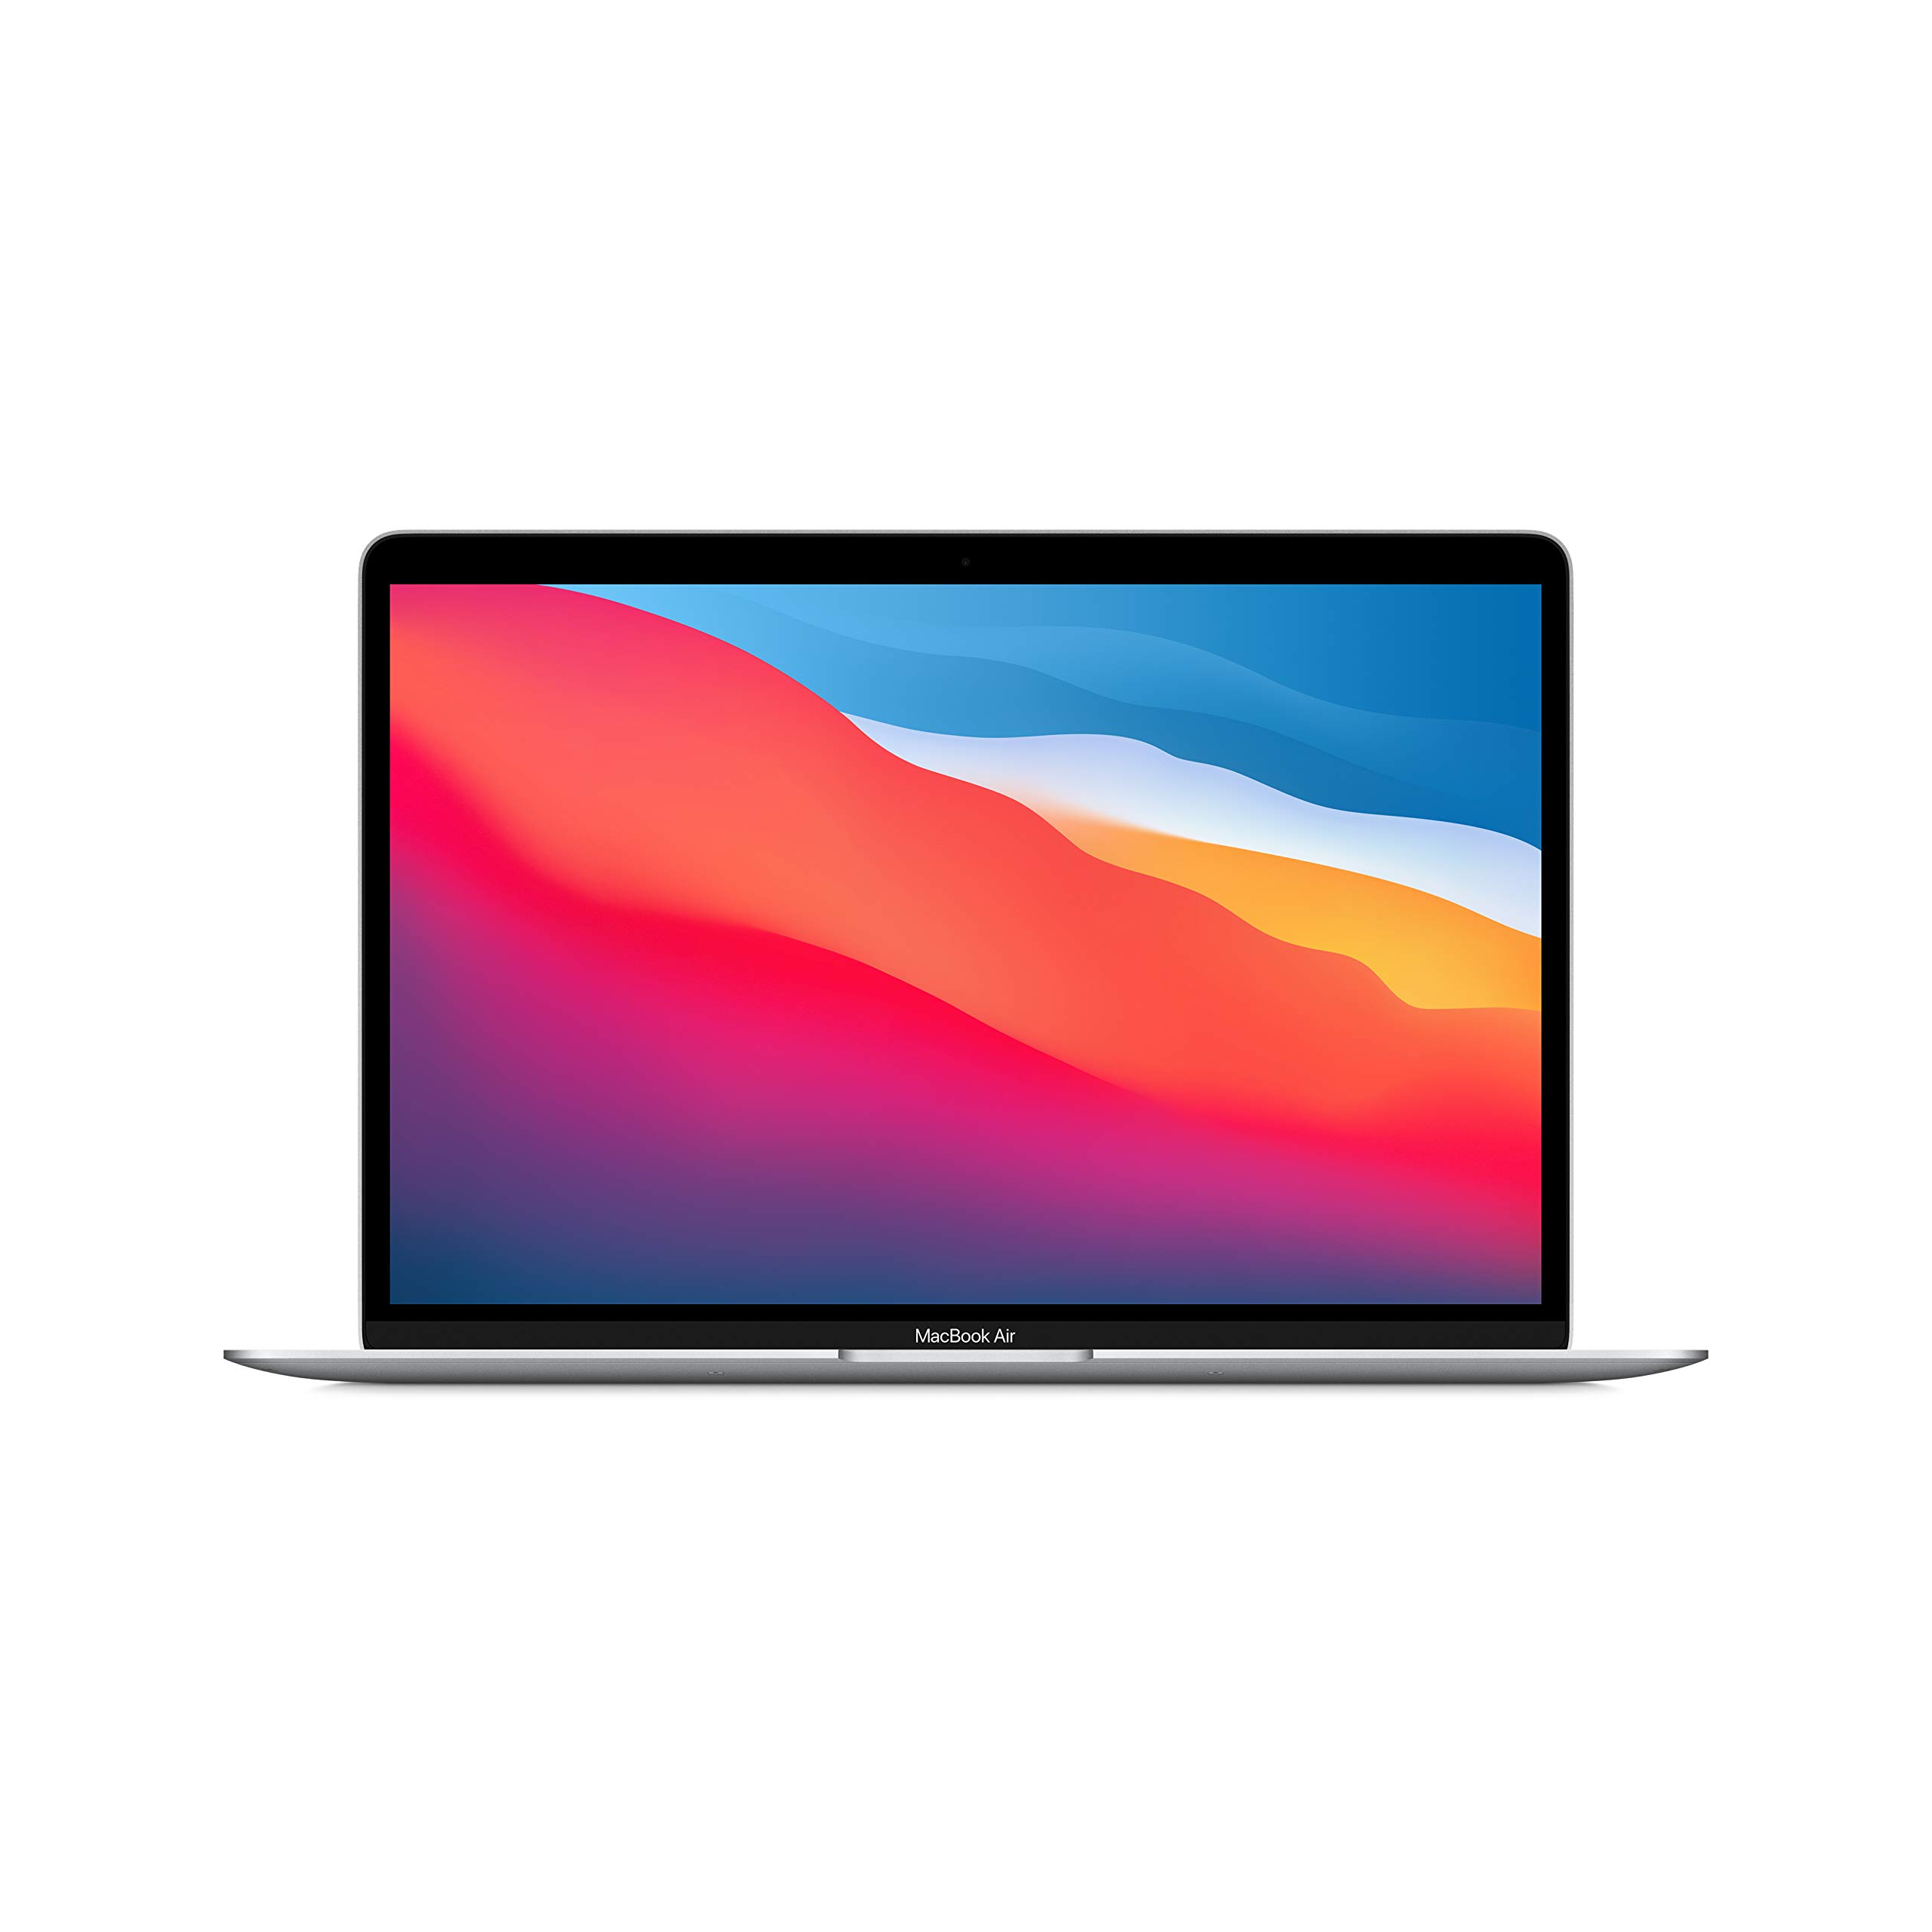 Apple 2020 MacBook Air Laptop M1 Chip, 13” Retina Display, 8GB RAM, 256GB SSD Storage Silver & Space Gray $749.99